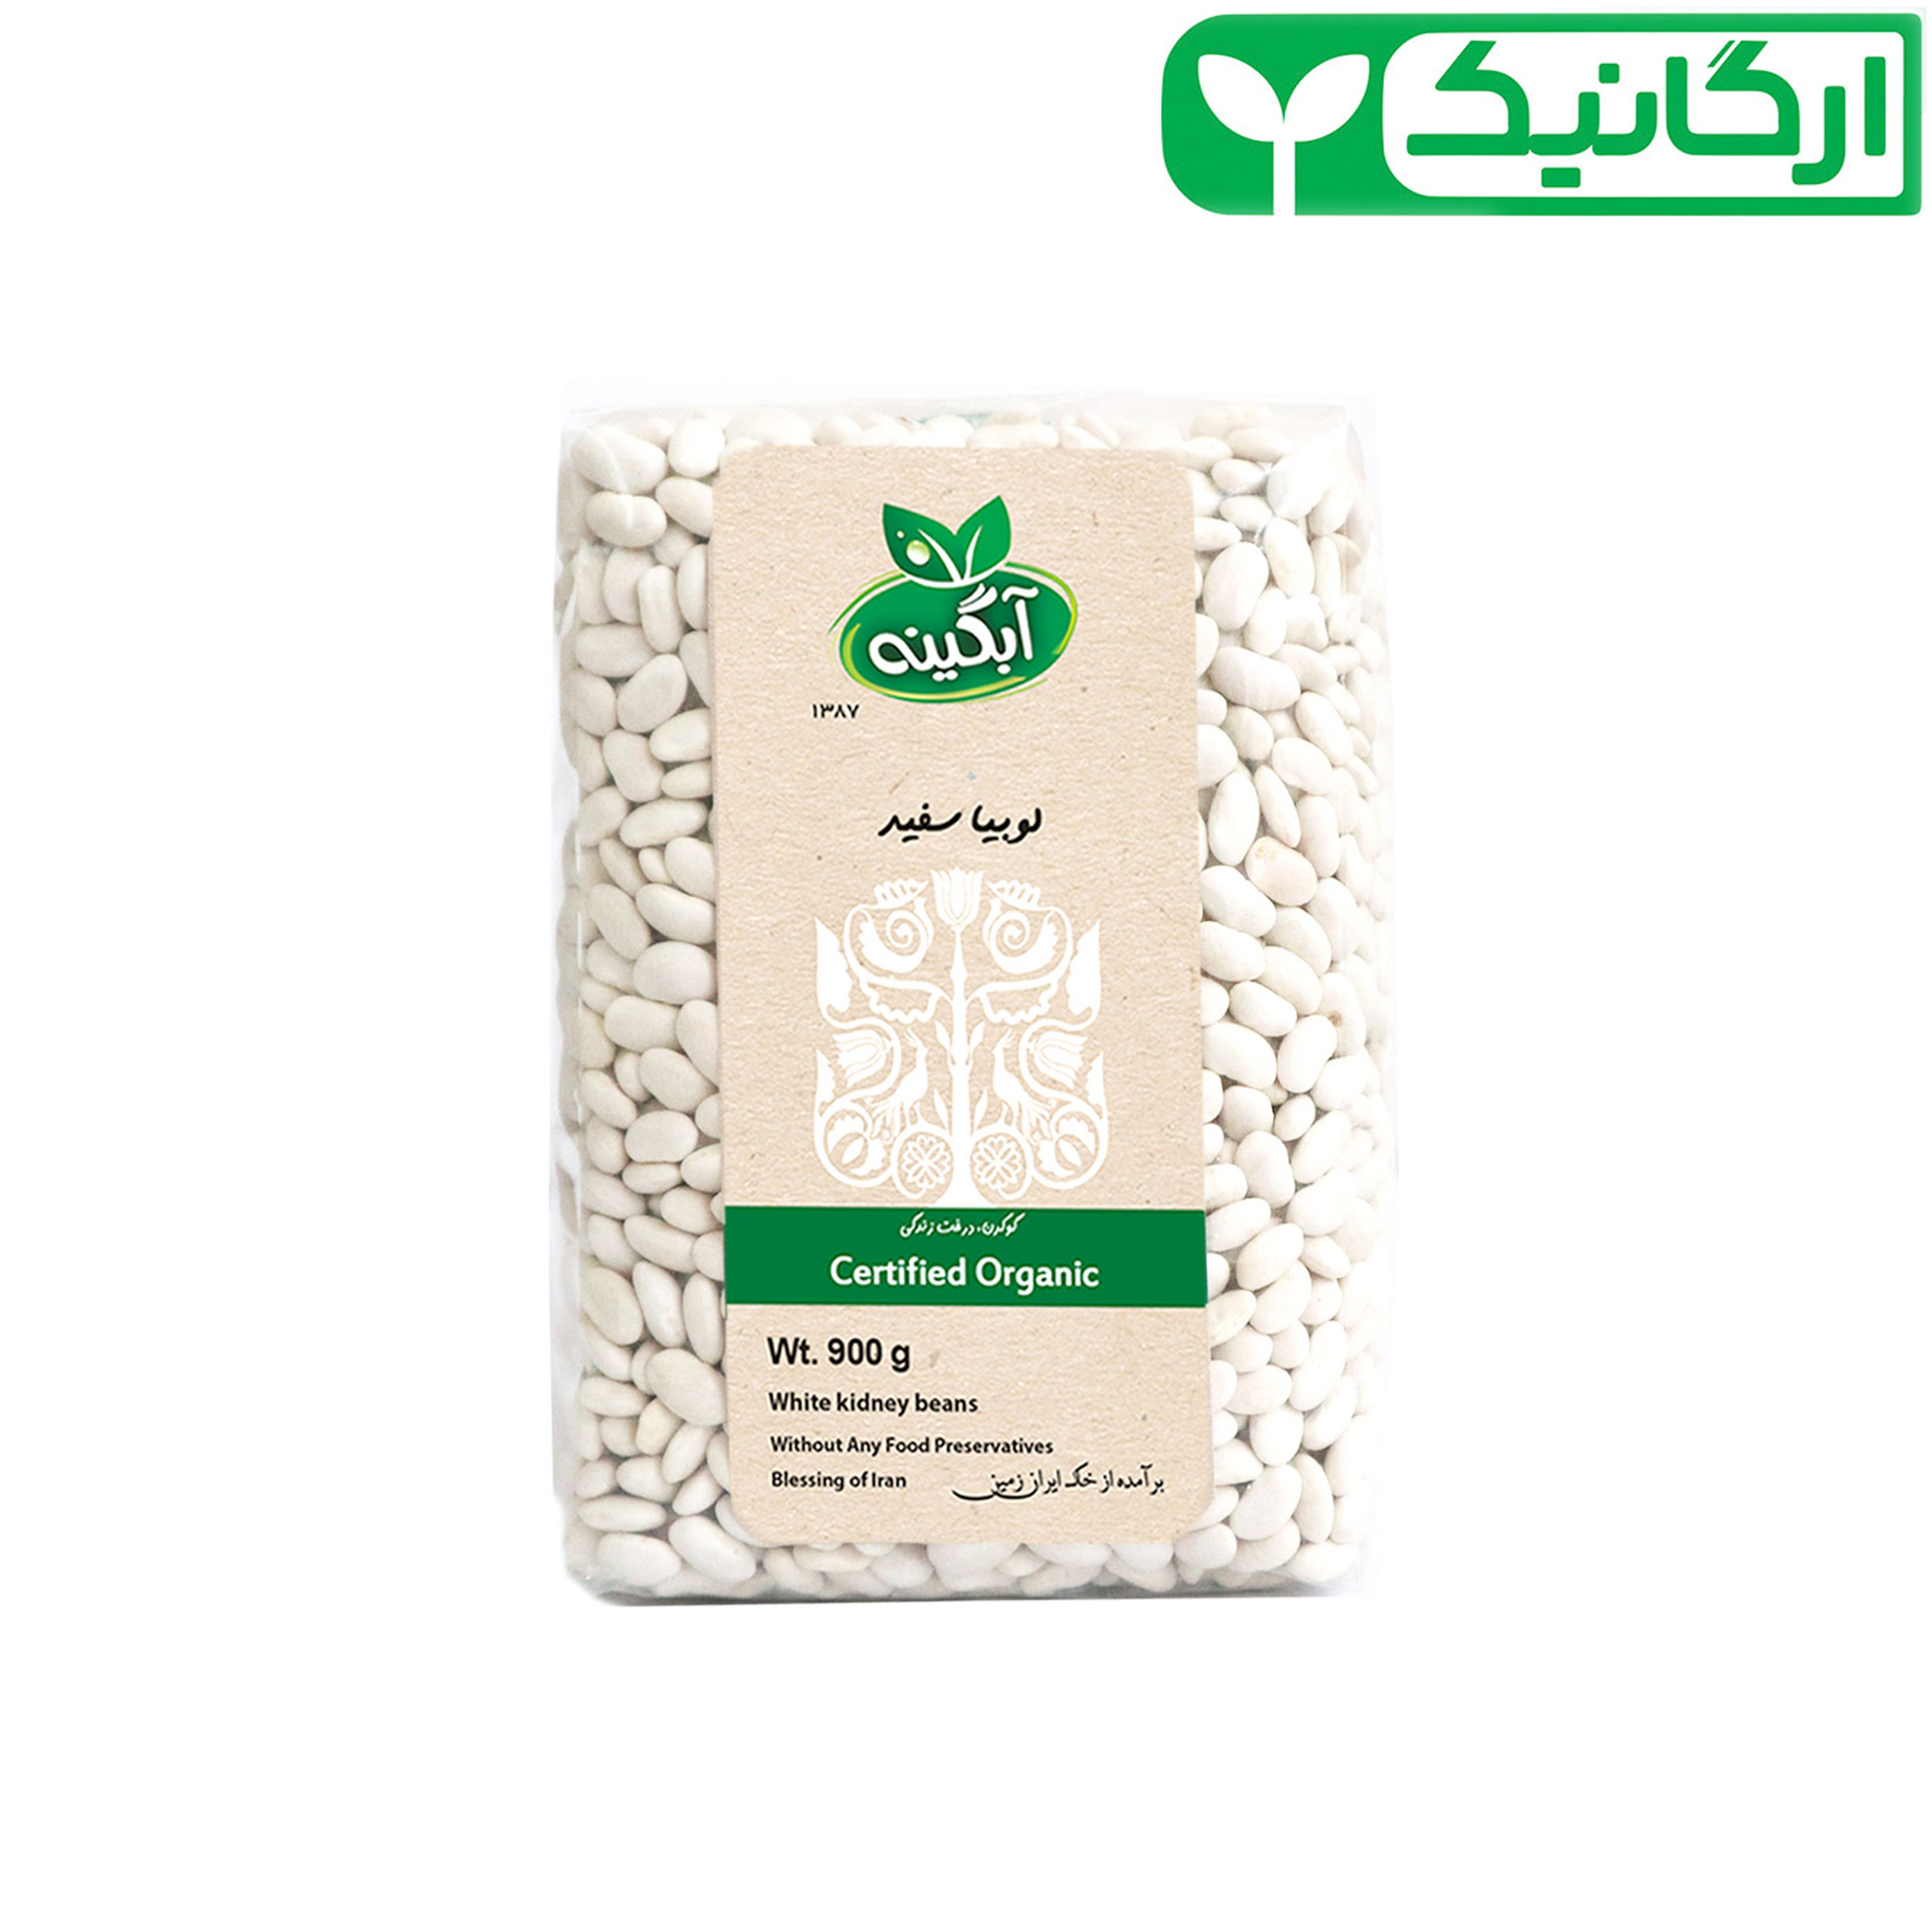 Abgineh Organic White kidney beans 900 grams